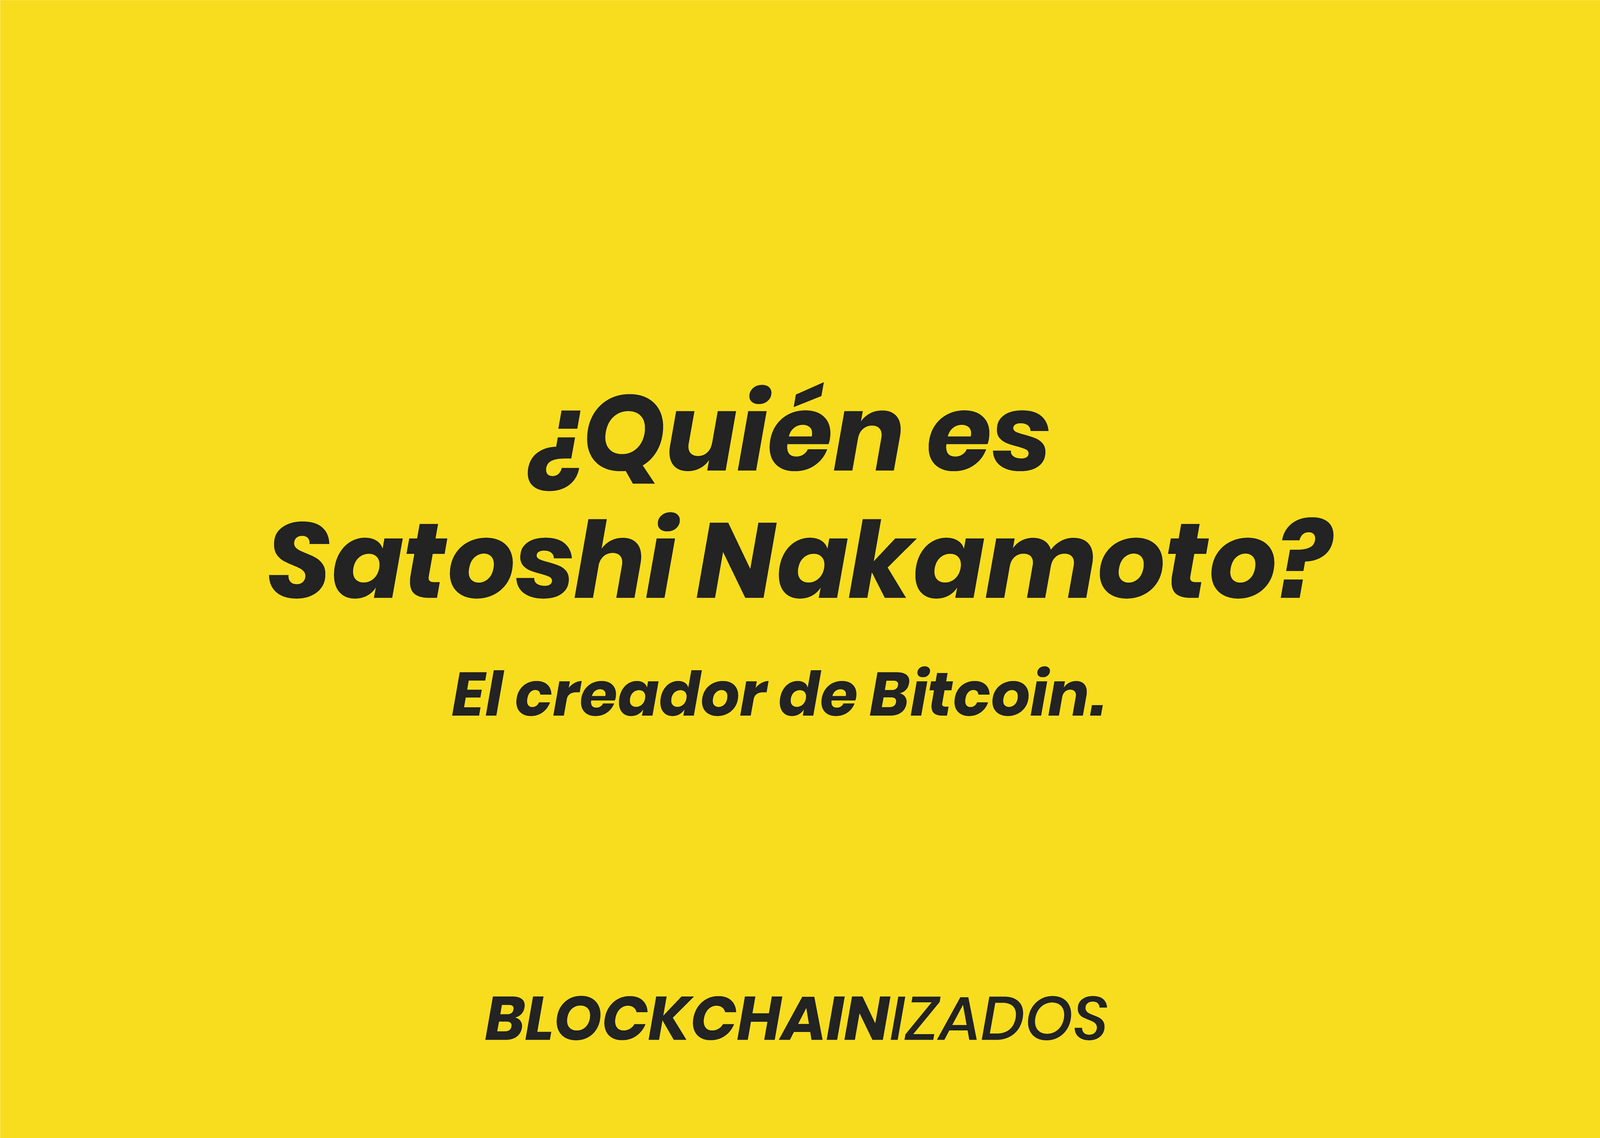 Quíen es satoshi creador de Bitcoin